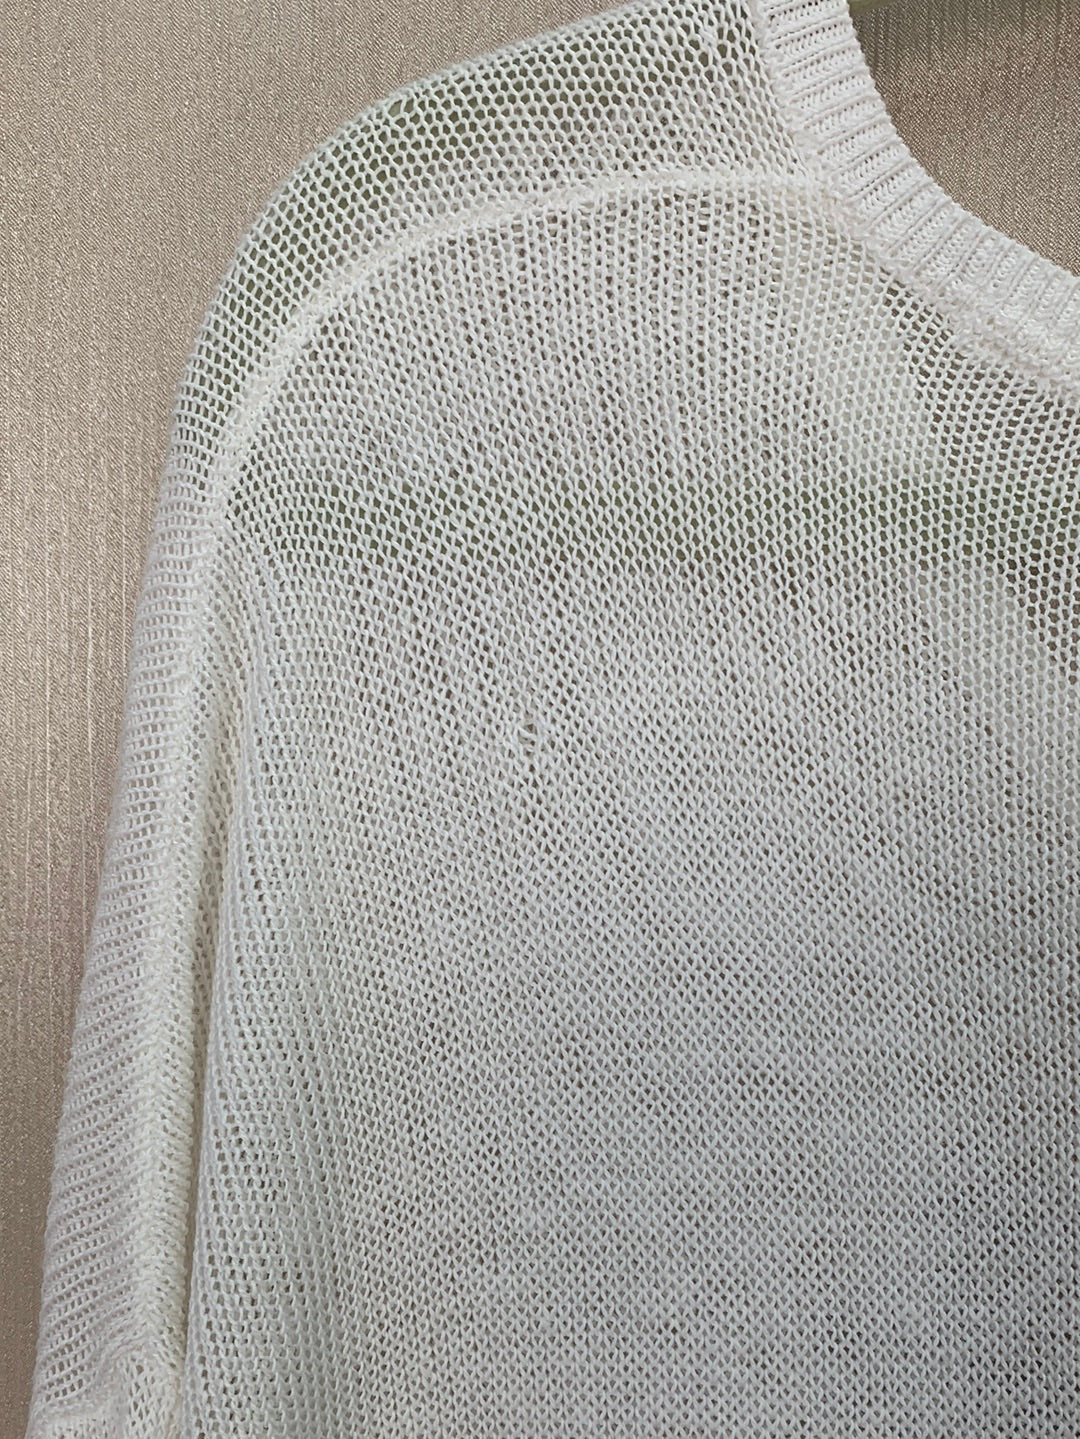 NWT - J JILL cream Floral Linen Blend 3/4 Sleeve V-Neck Sweater Top - L (flaw)